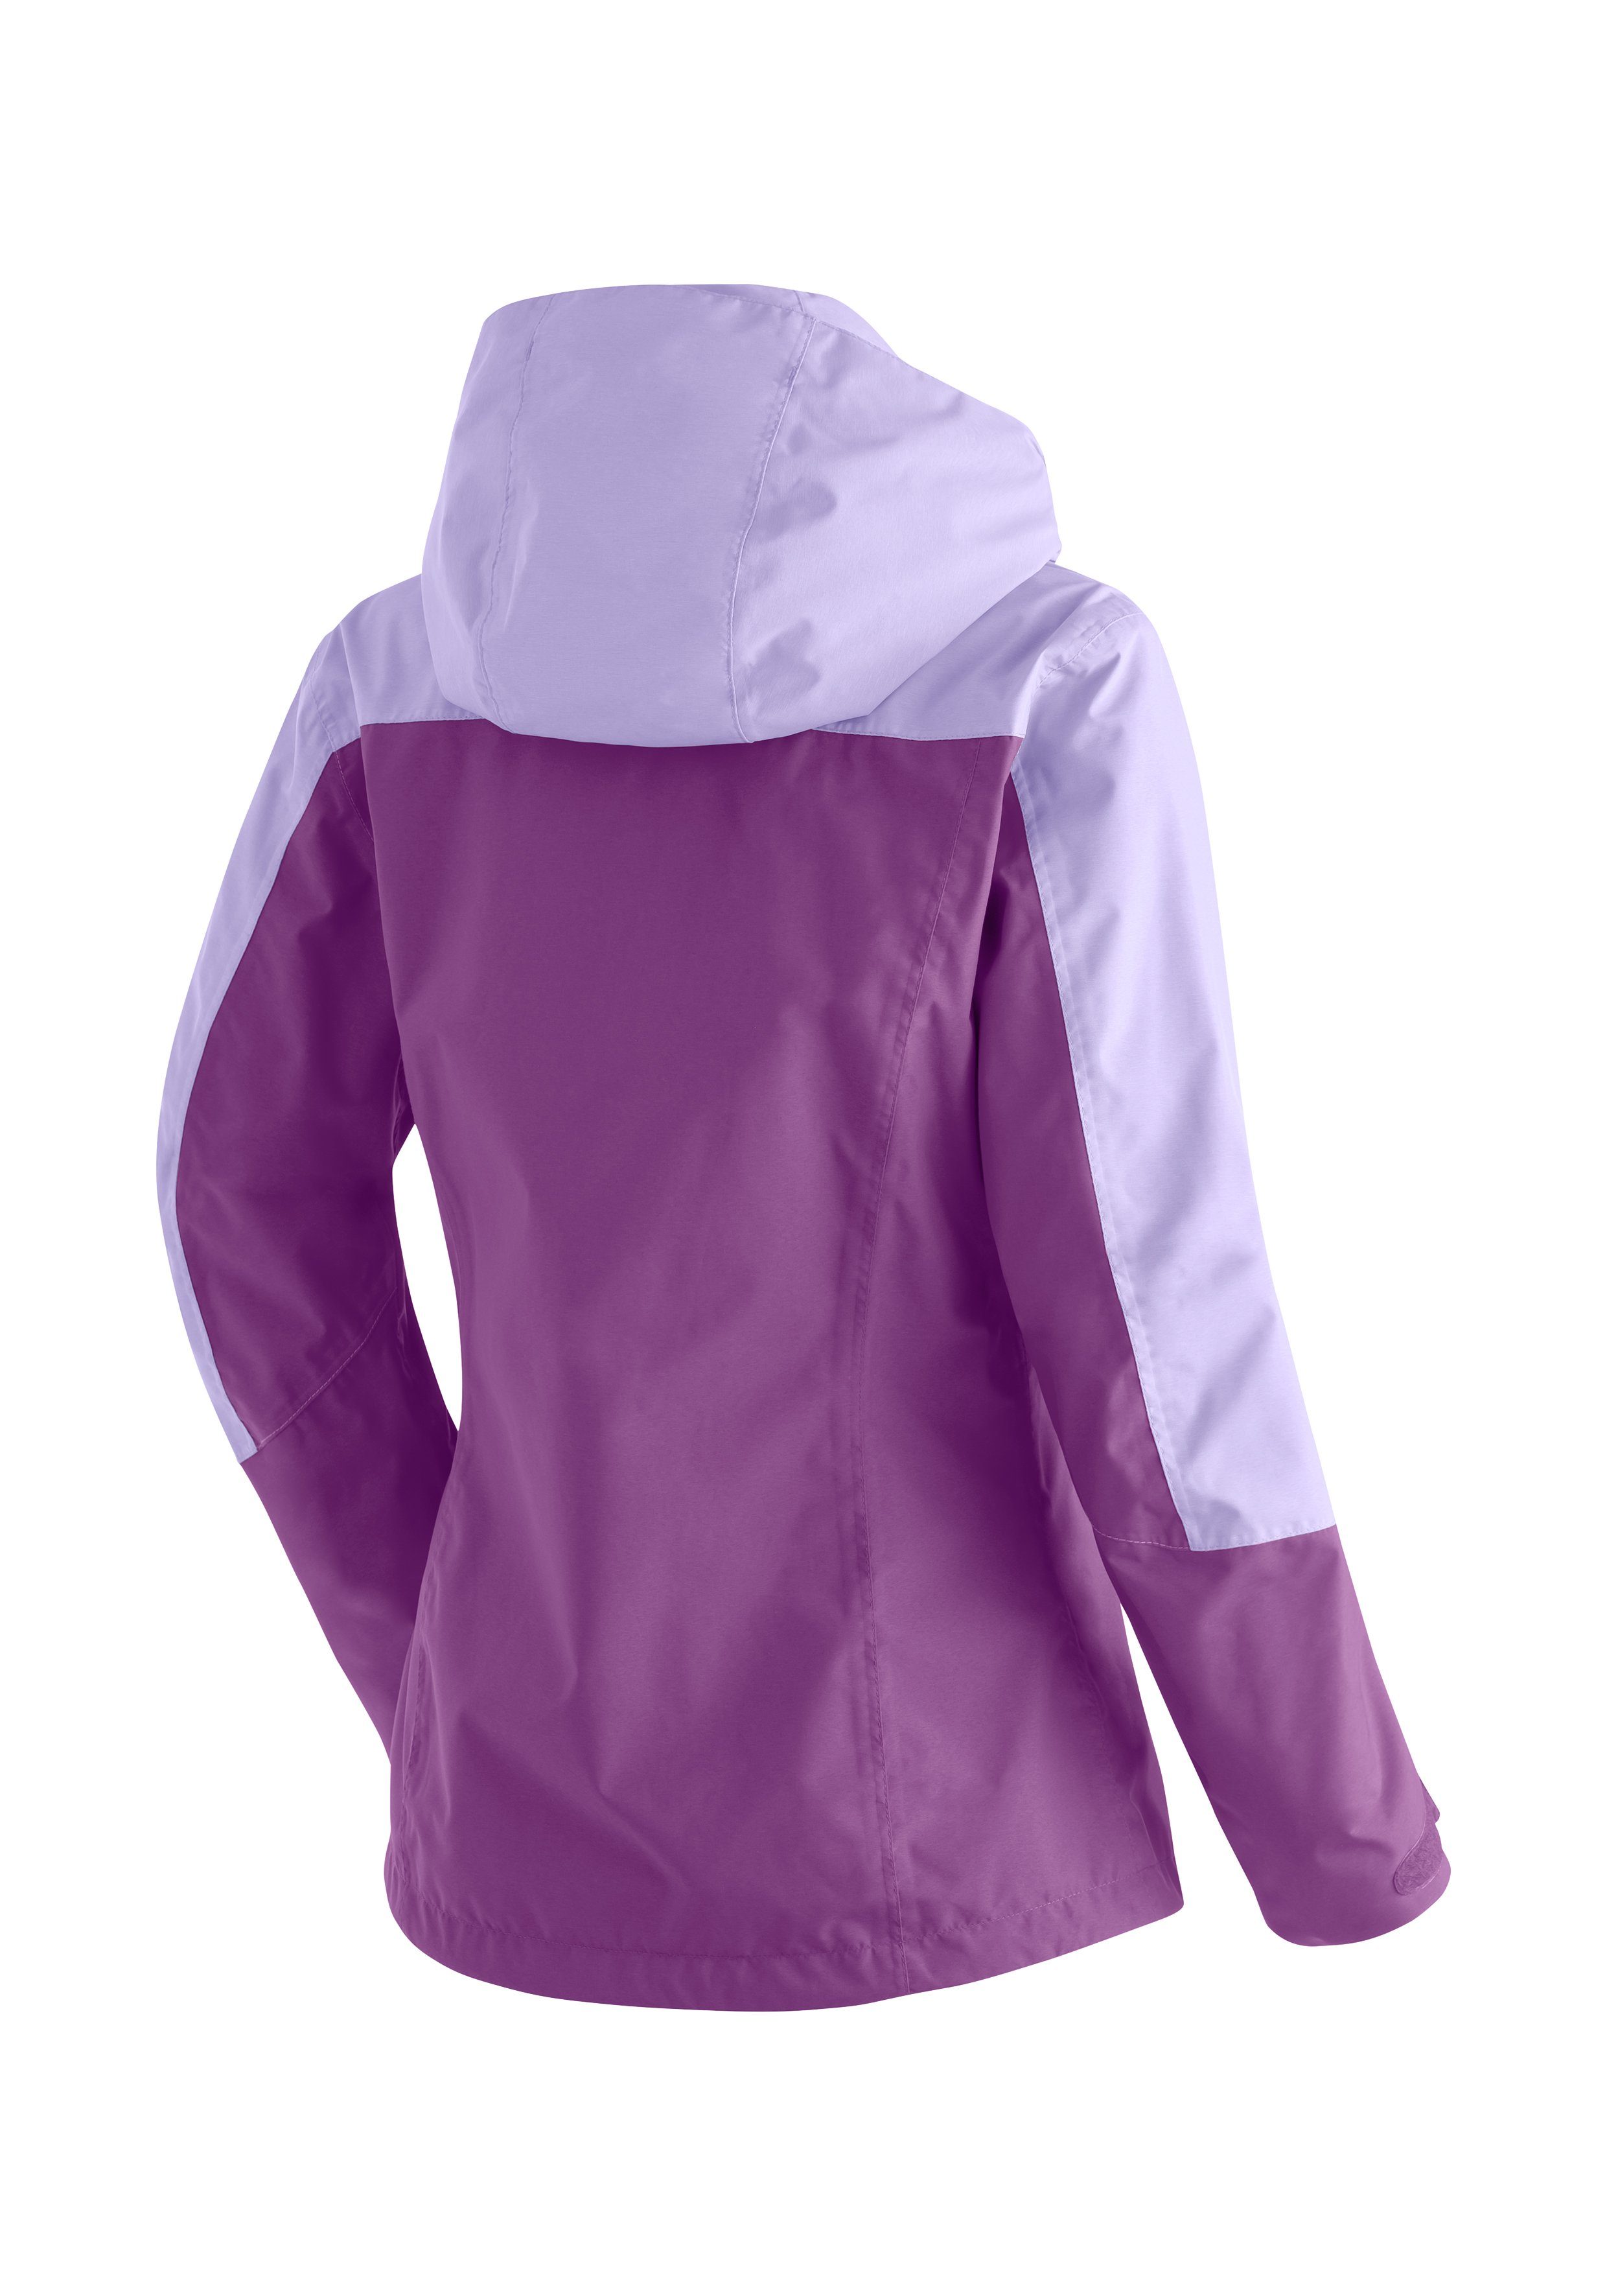 Outdoorjacke Partu purpurviolett Sports Funktionsjacke Maier atmungsaktivem W Wasserdichte aus Material